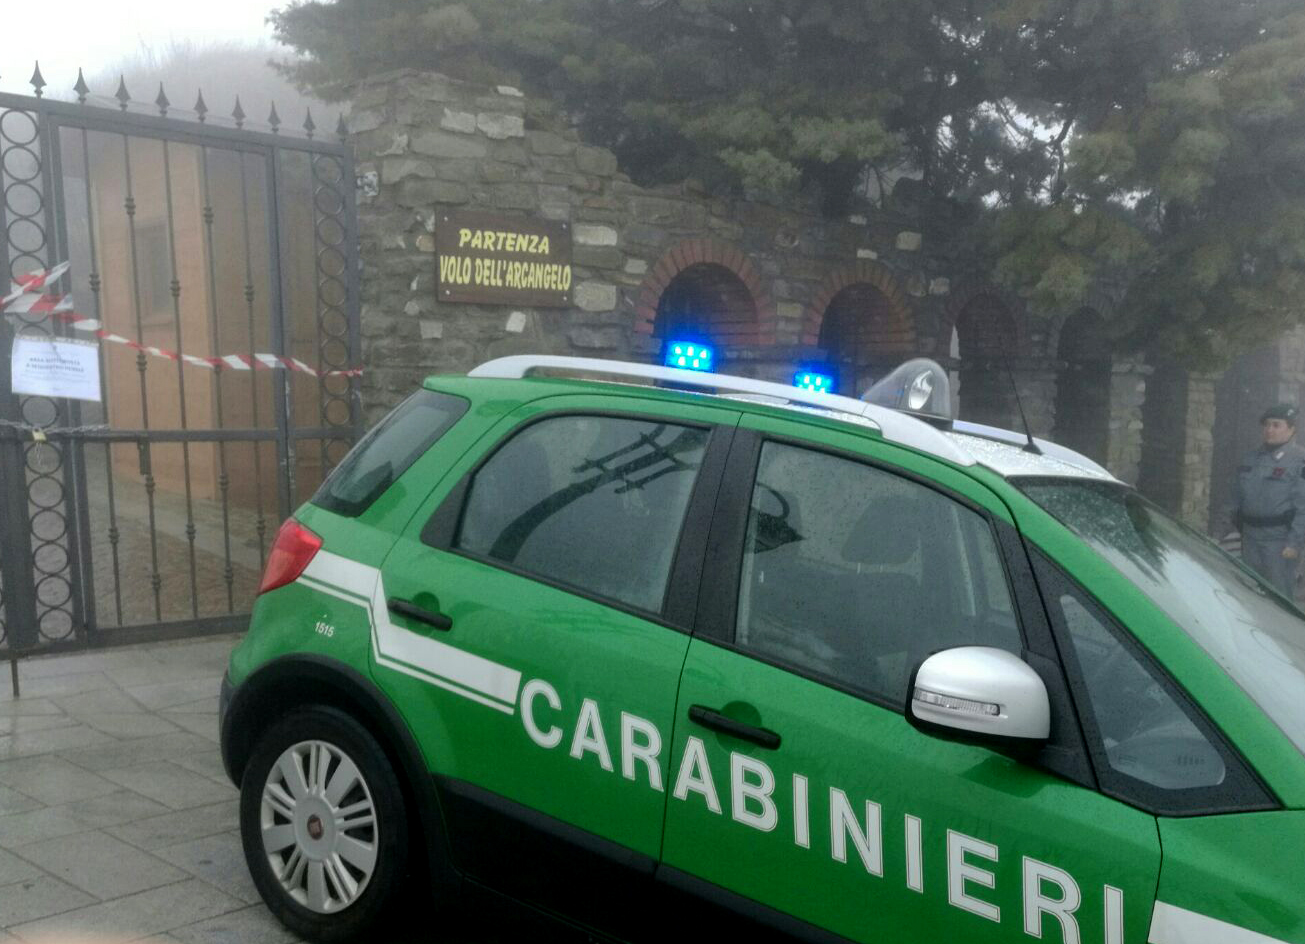 amendolara carabinieri forestale.jpg